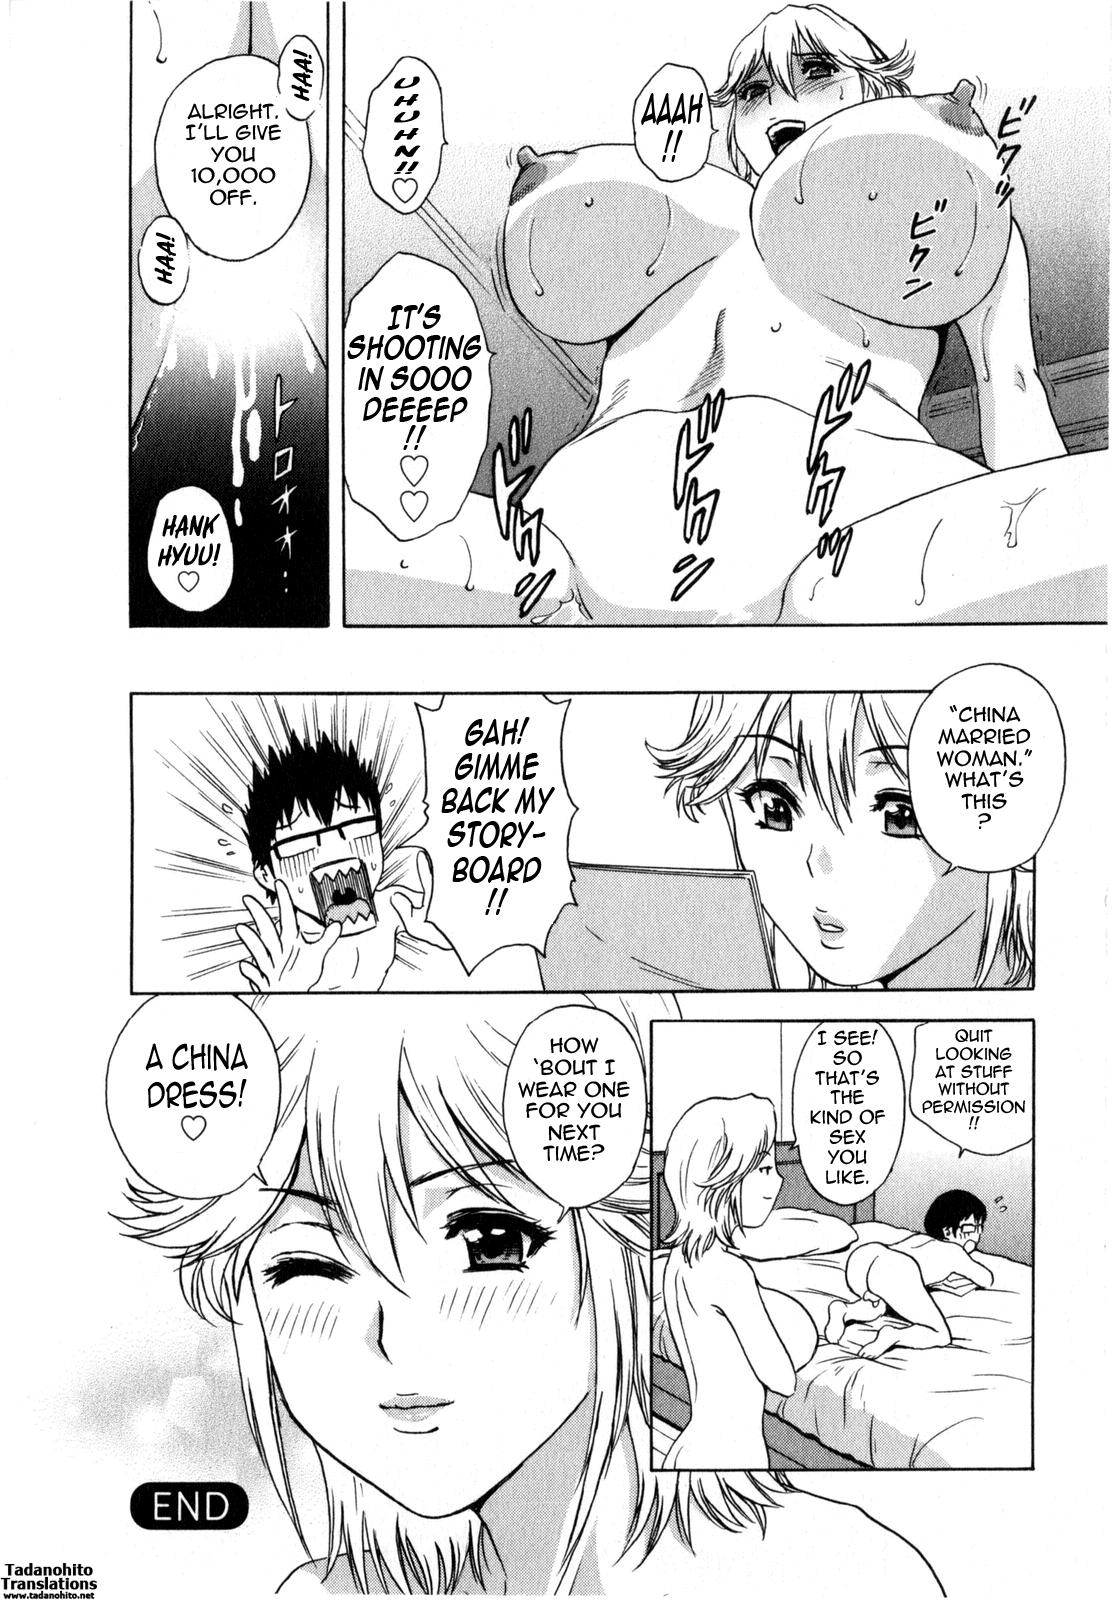 [Hidemaru] Life with Married Women Just Like a Manga 2 - Ch. 1-6 [English] {Tadanohito} 63